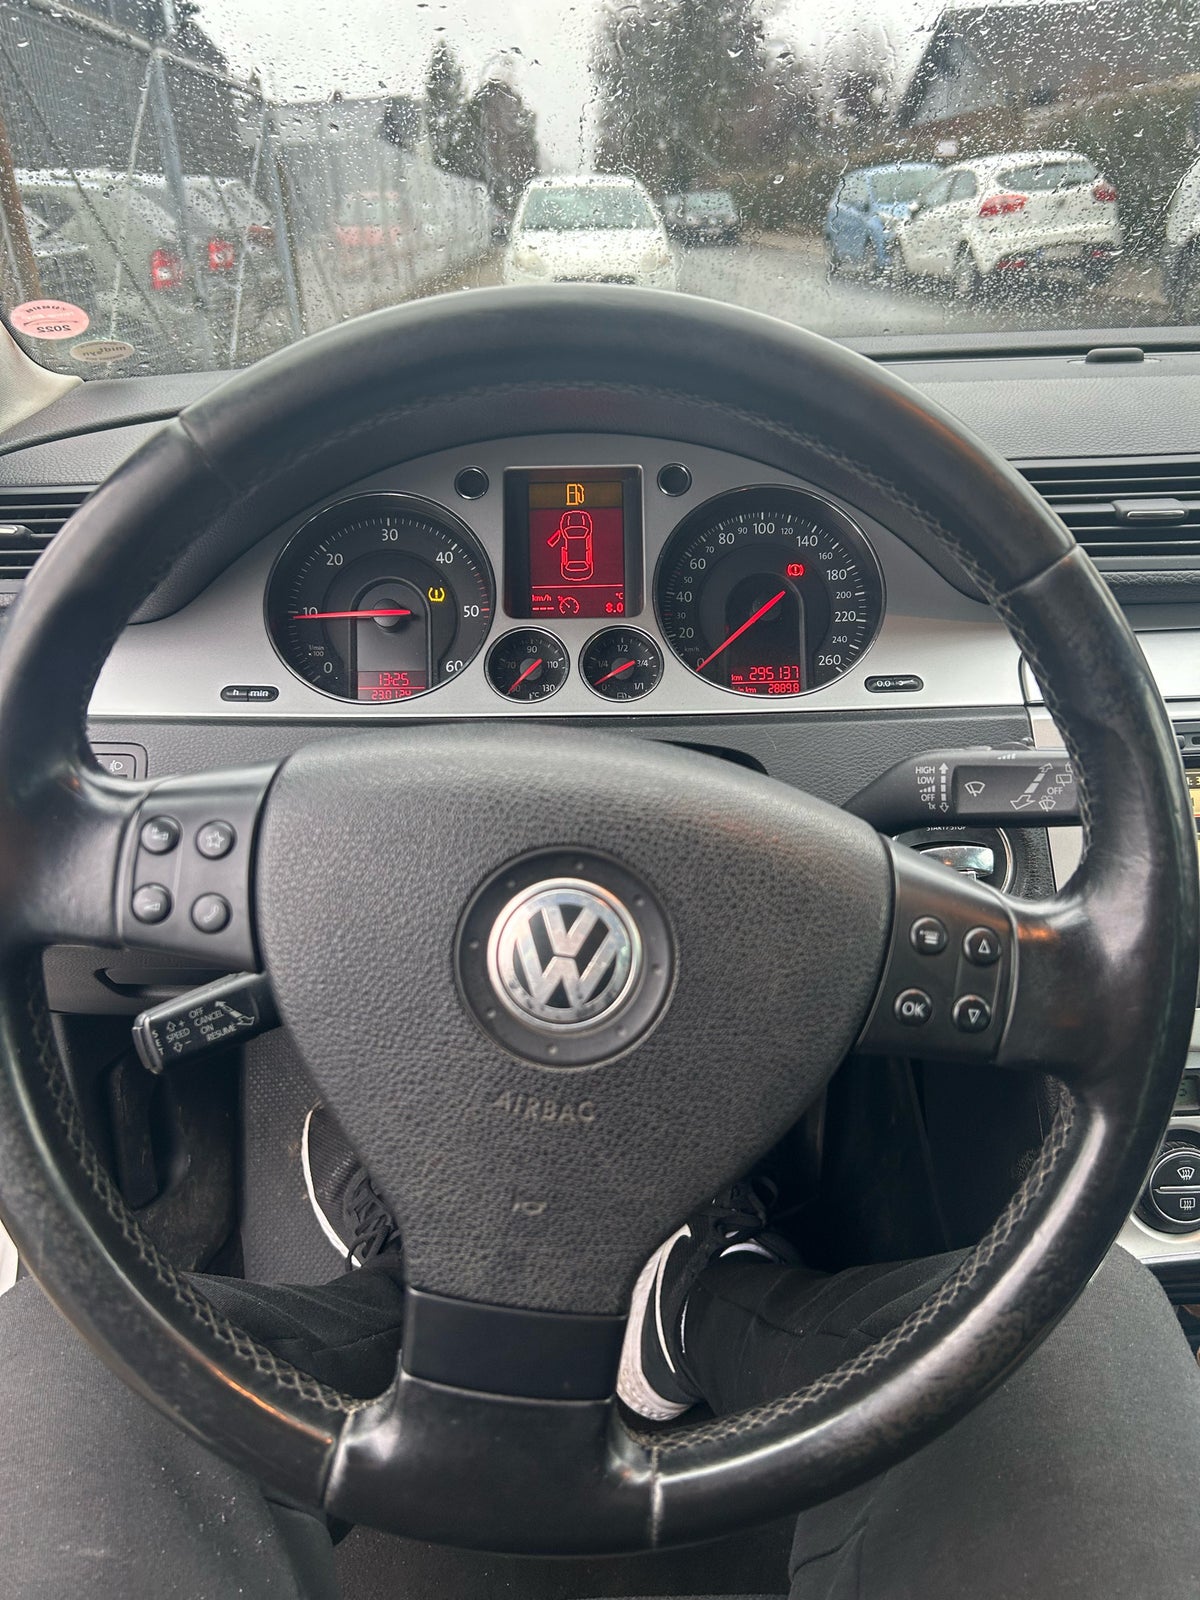 VW Passat, 2,0 TDi 170 Sportline Variant, Diesel